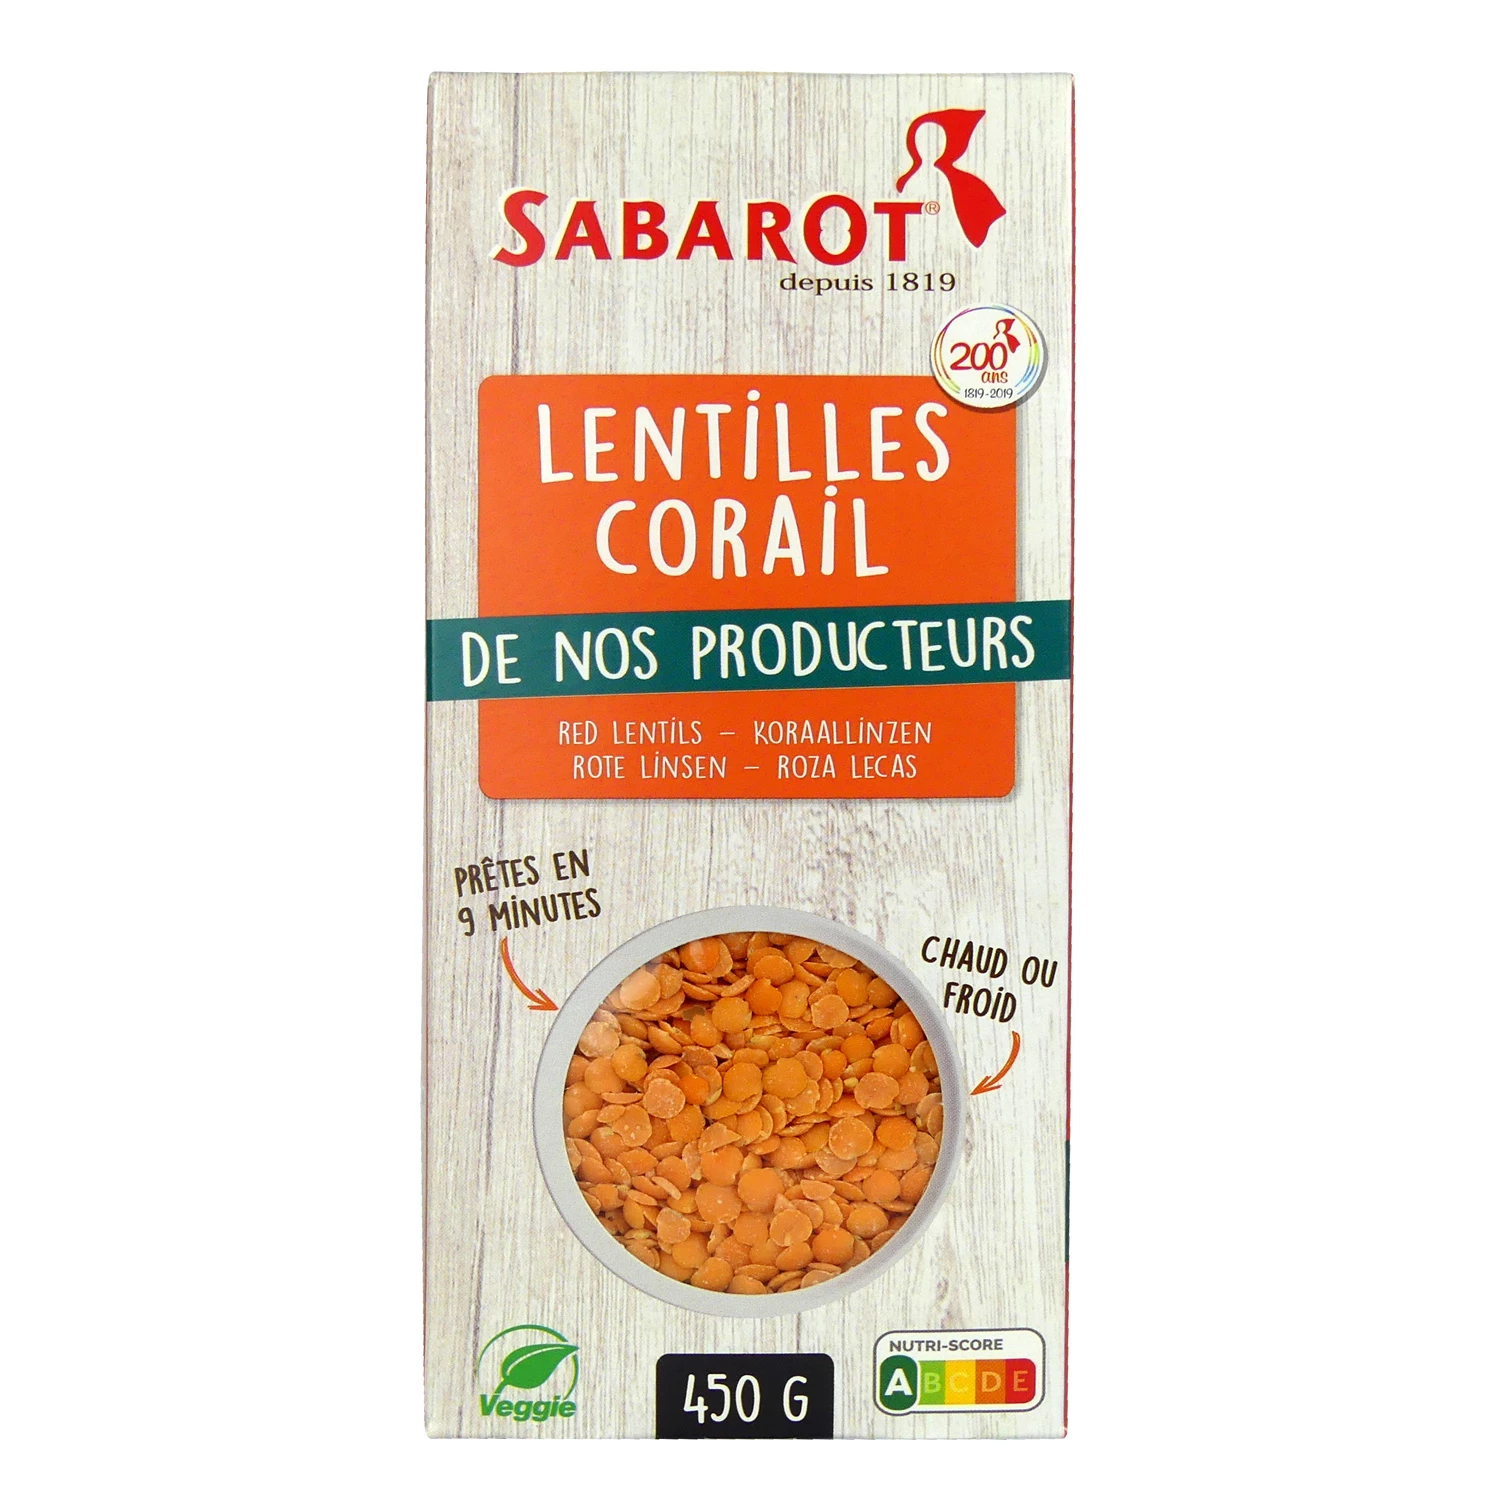 Lentilles corail 450g - SABAROT